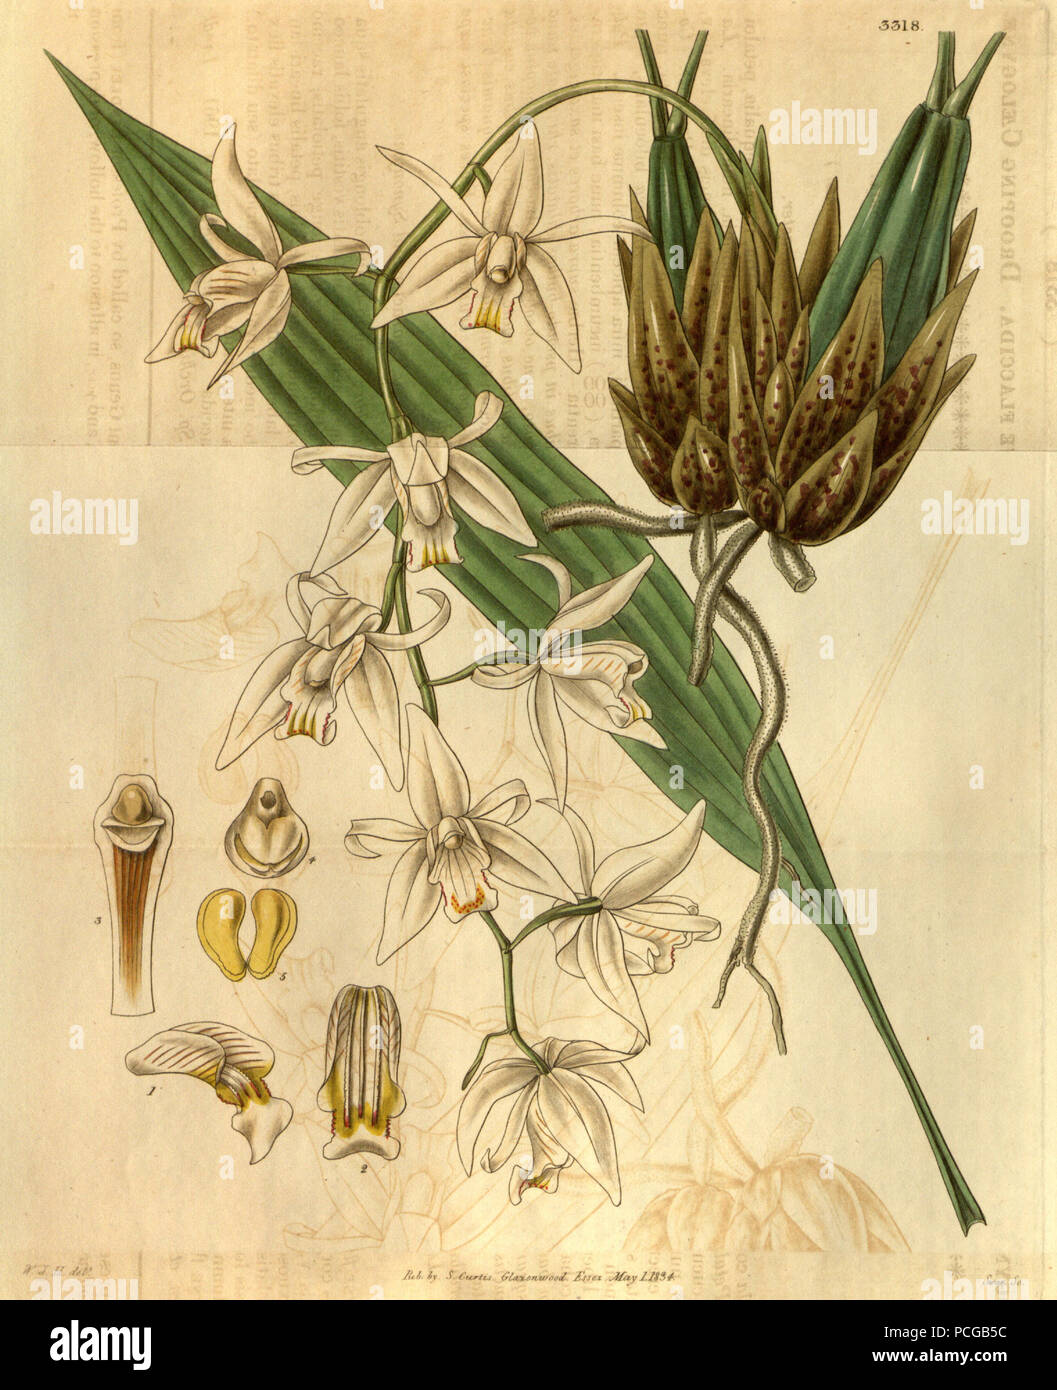 137 Coelogyne flaccida - Curtis' 61 (N.S. 8) pl. 3318 (1834) Stock Photo